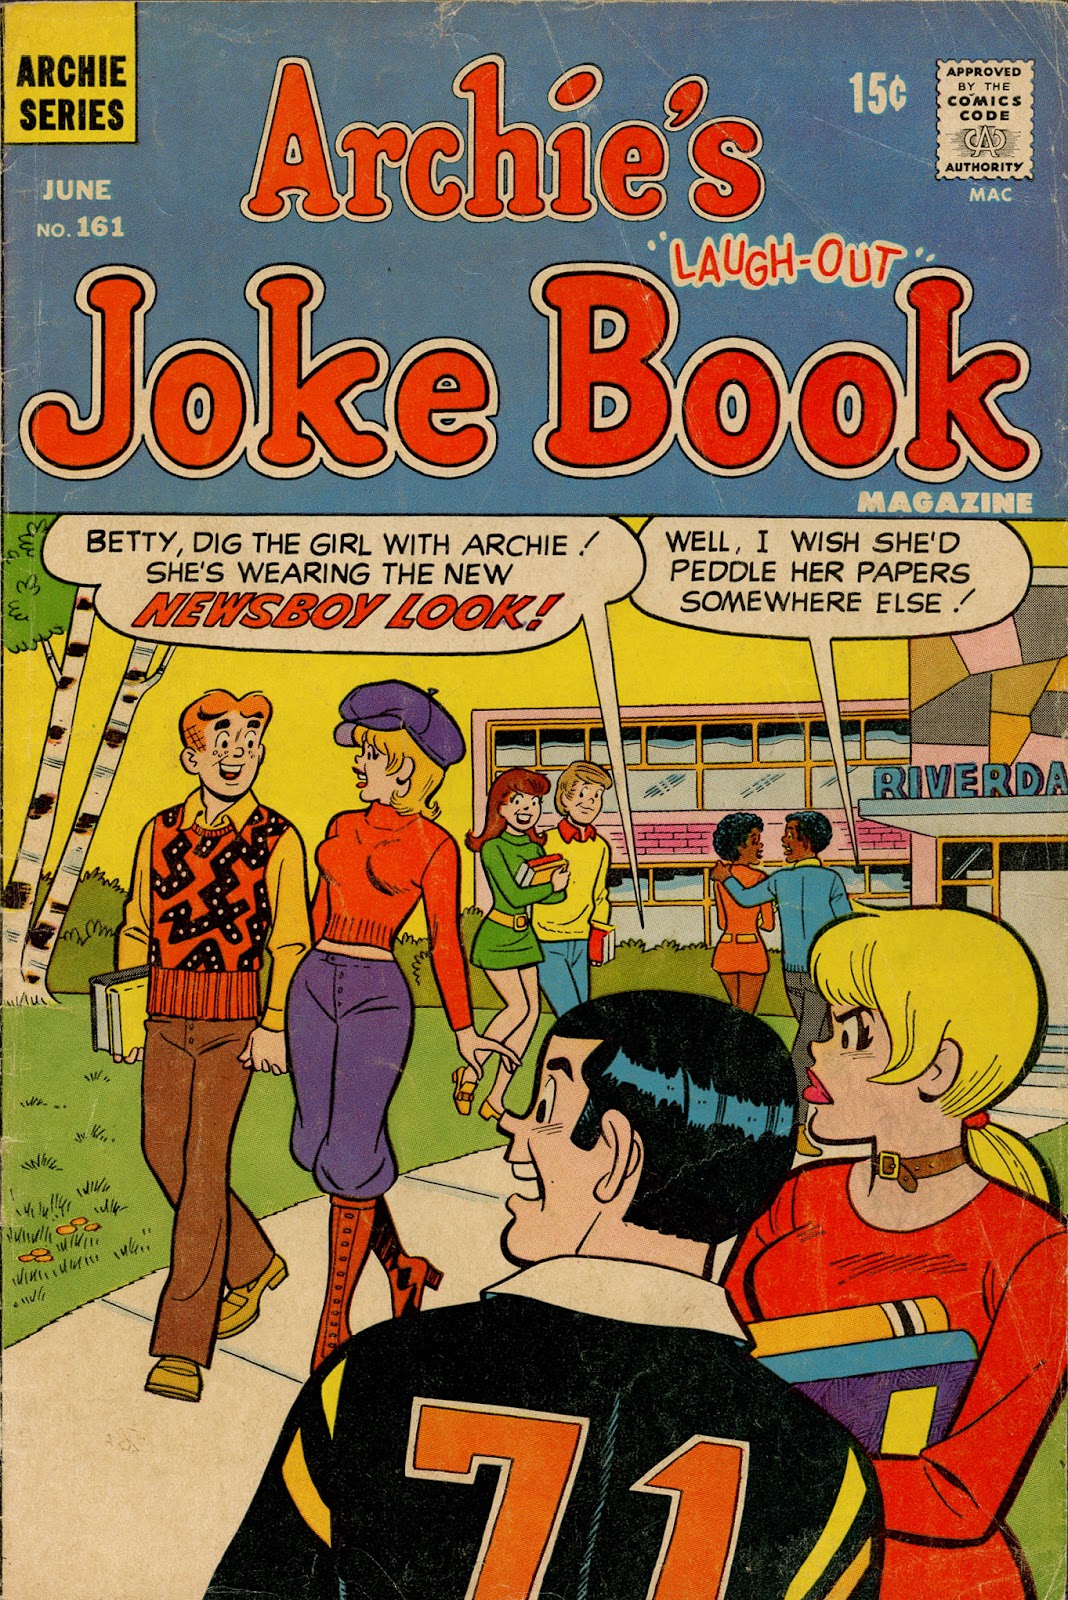 Archie's Joke Book Magazine issue 161 - Page 1